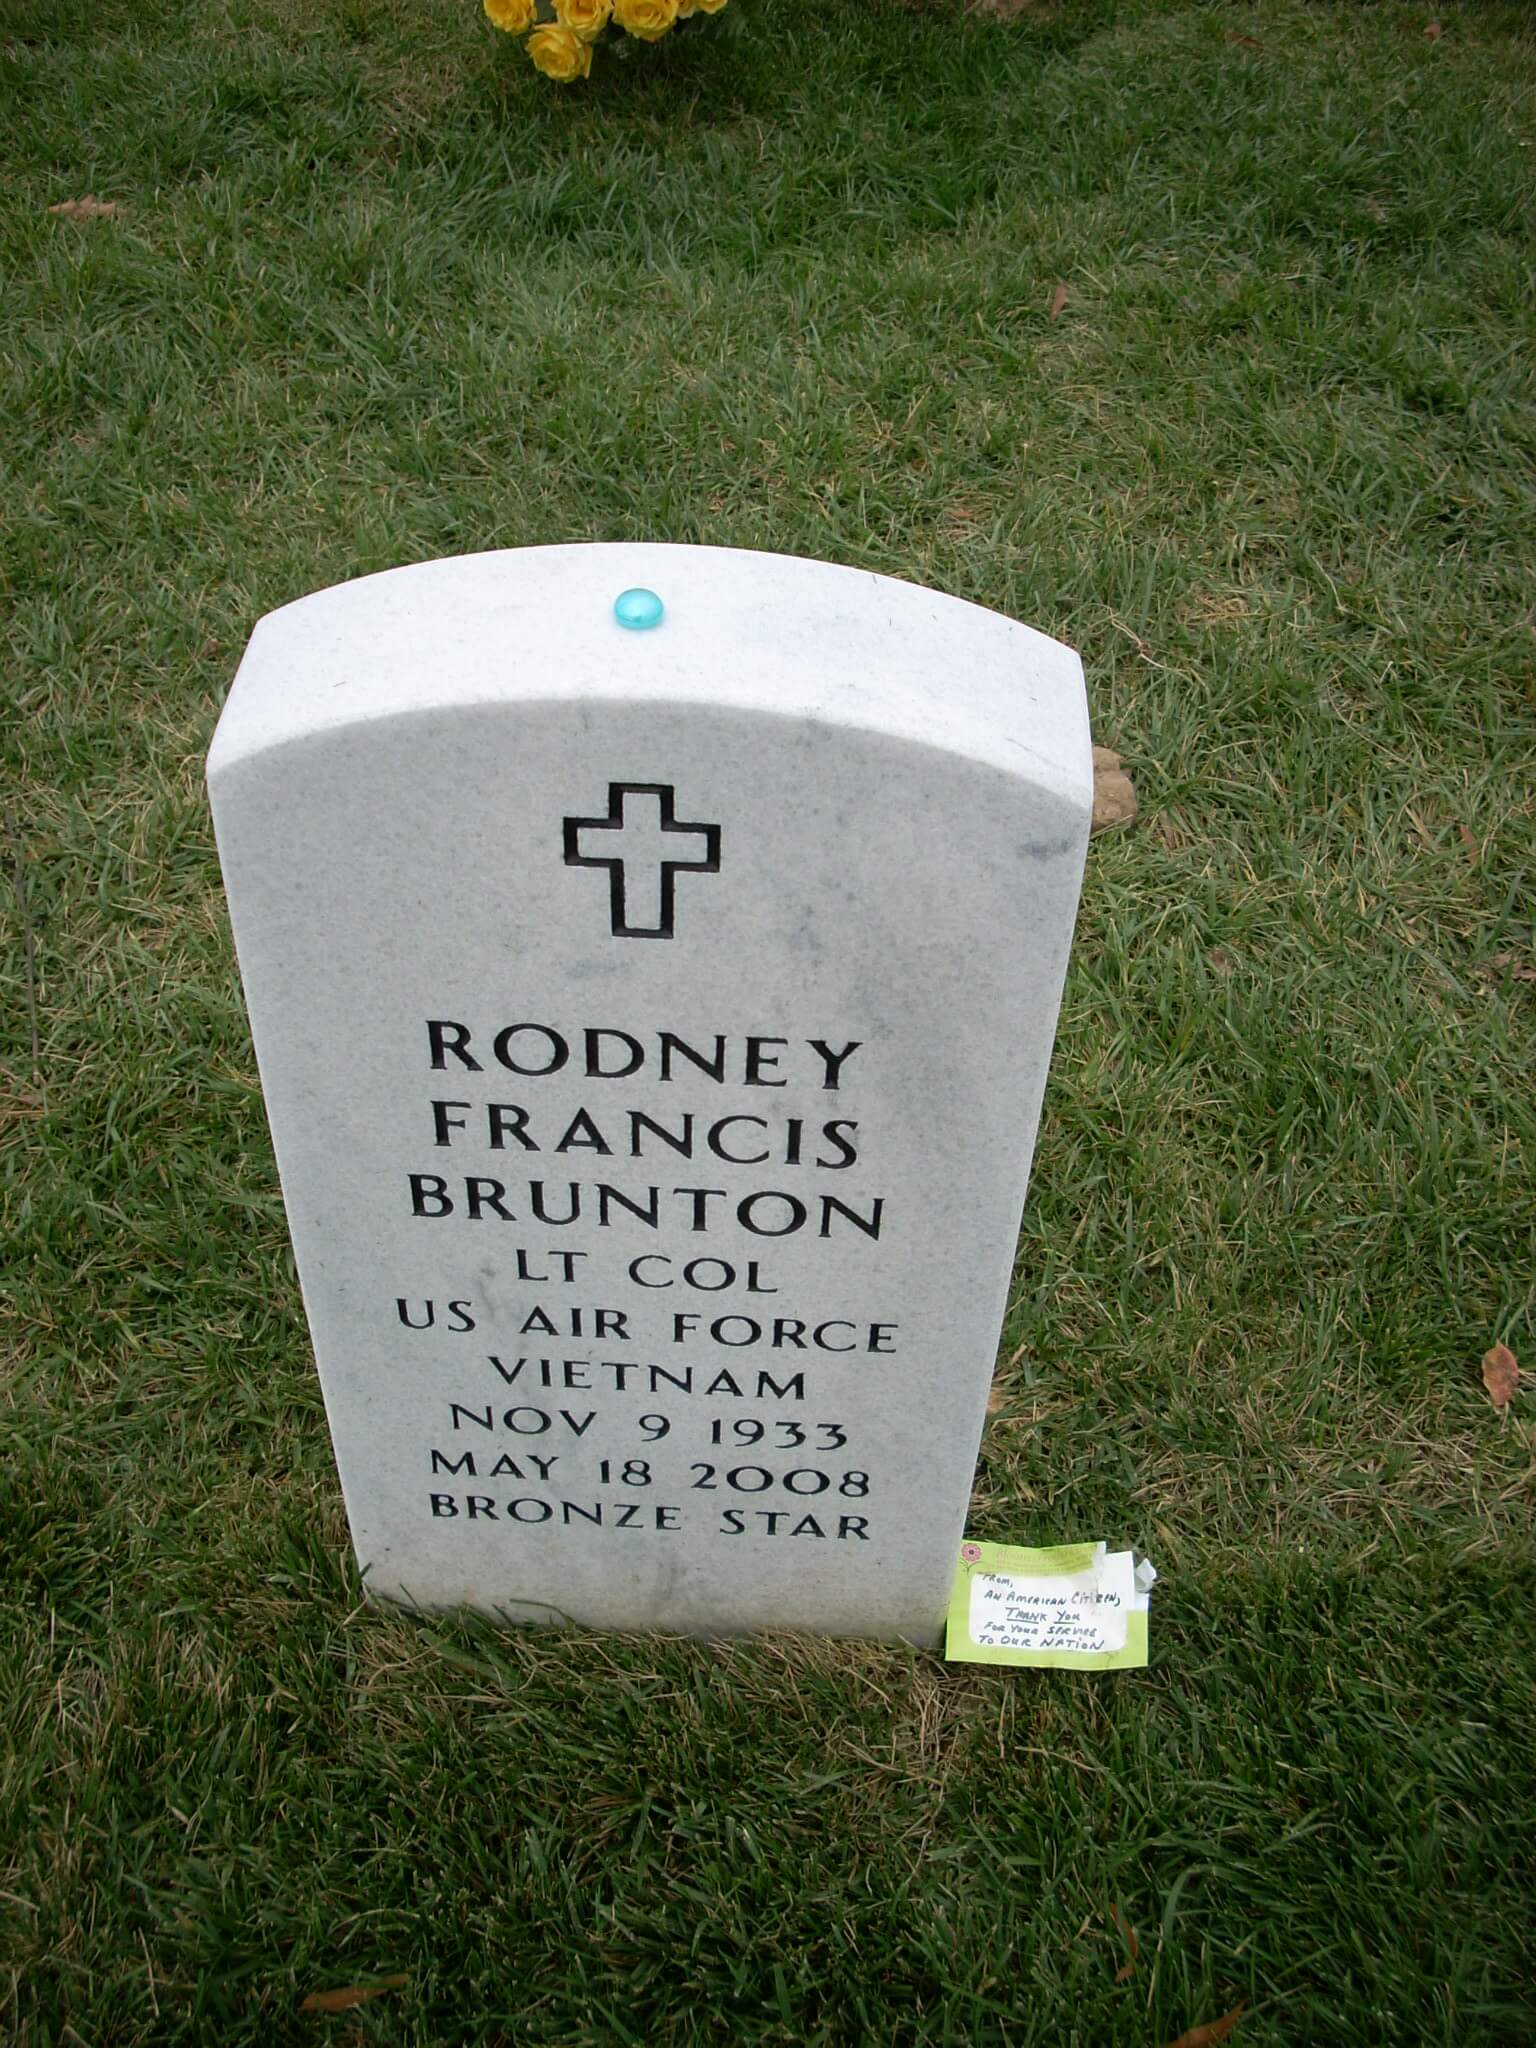 rfbrunton-gravesite-photo-february-2009-001